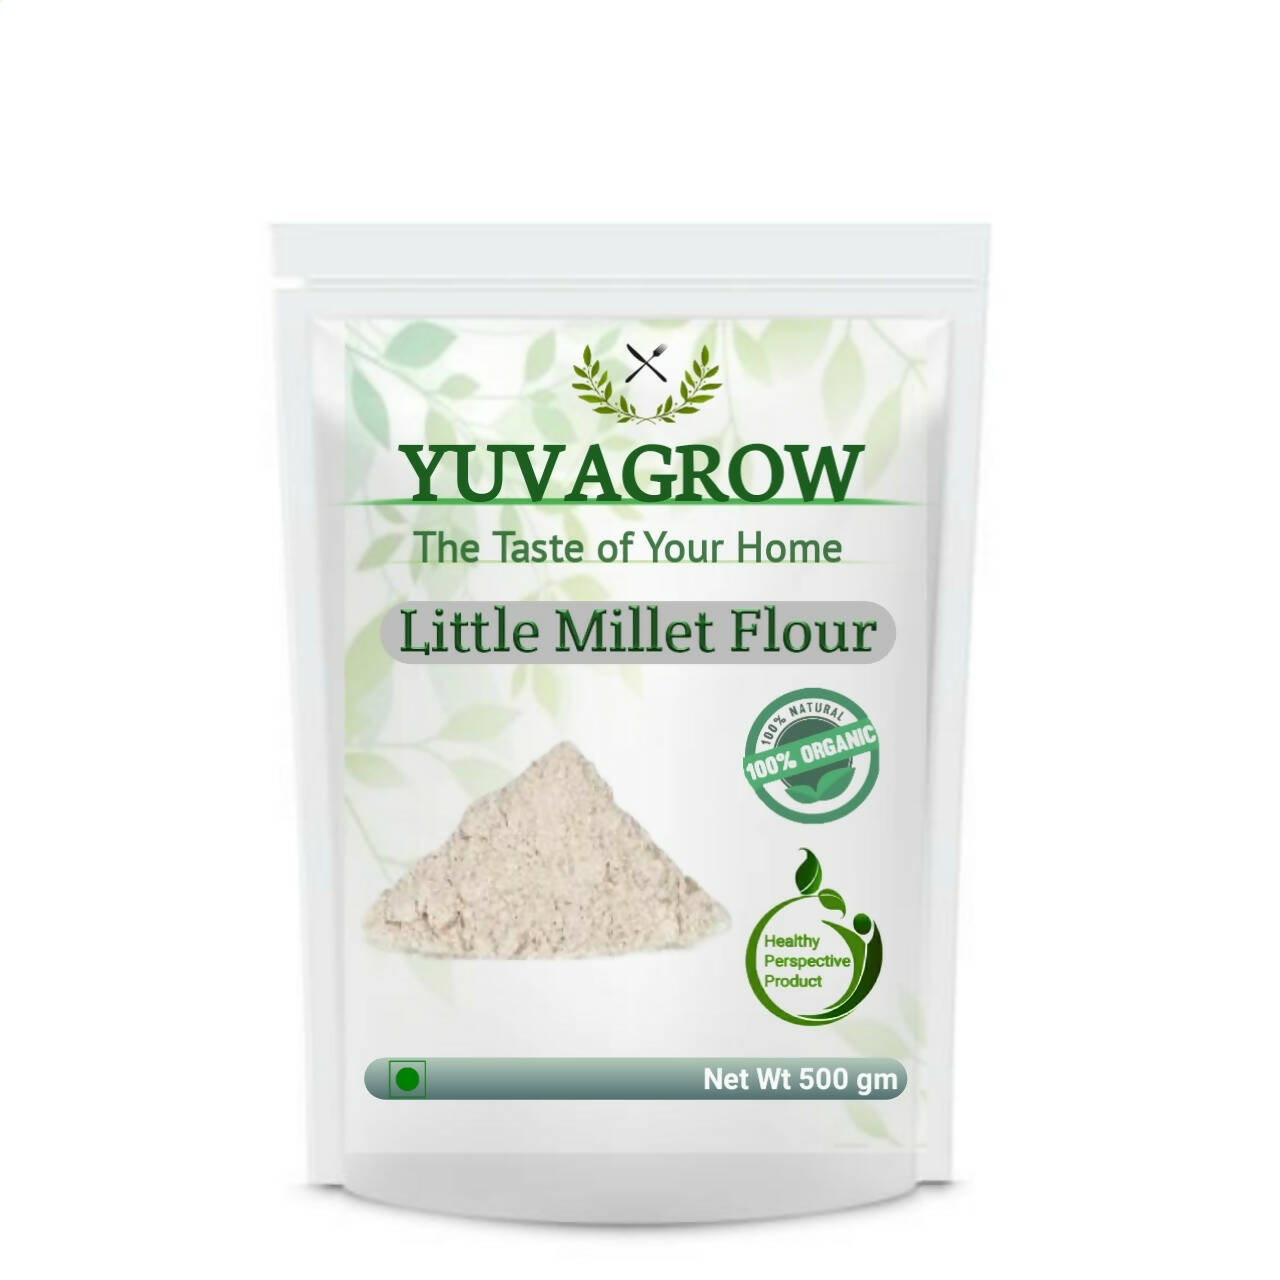 Yuvagrow Little Millet Flour - buy in USA, Australia, Canada